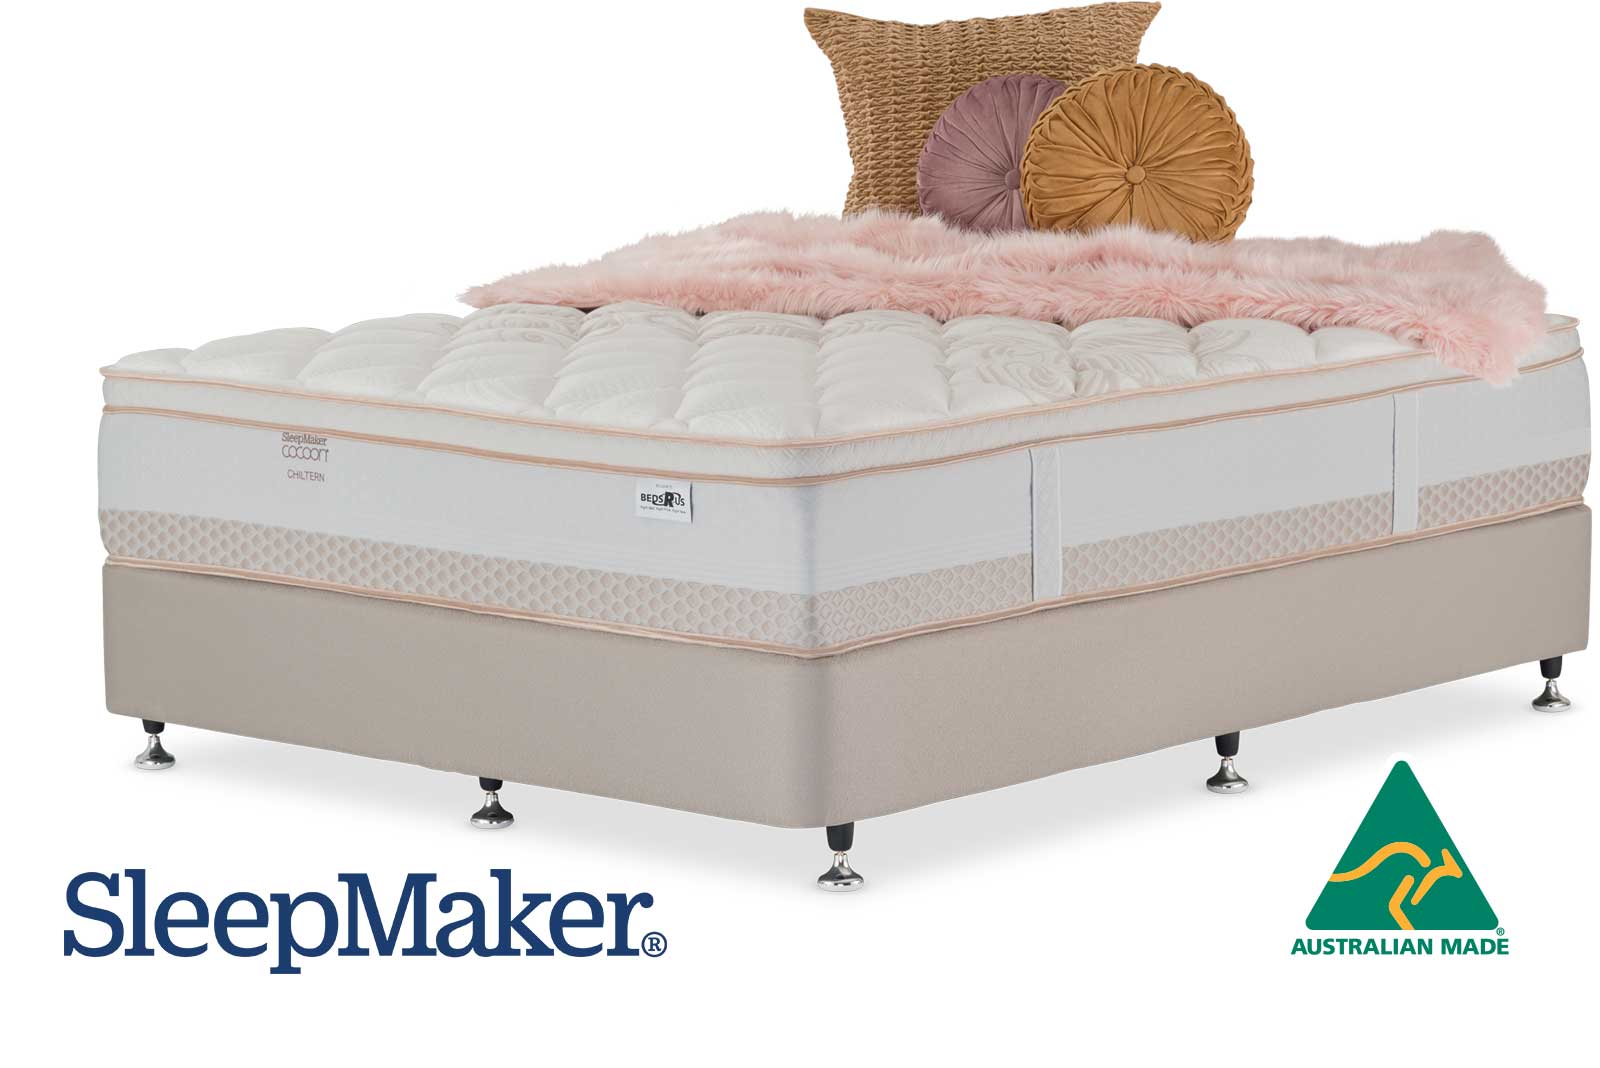 sleepmaker lifestyle plush mattress review